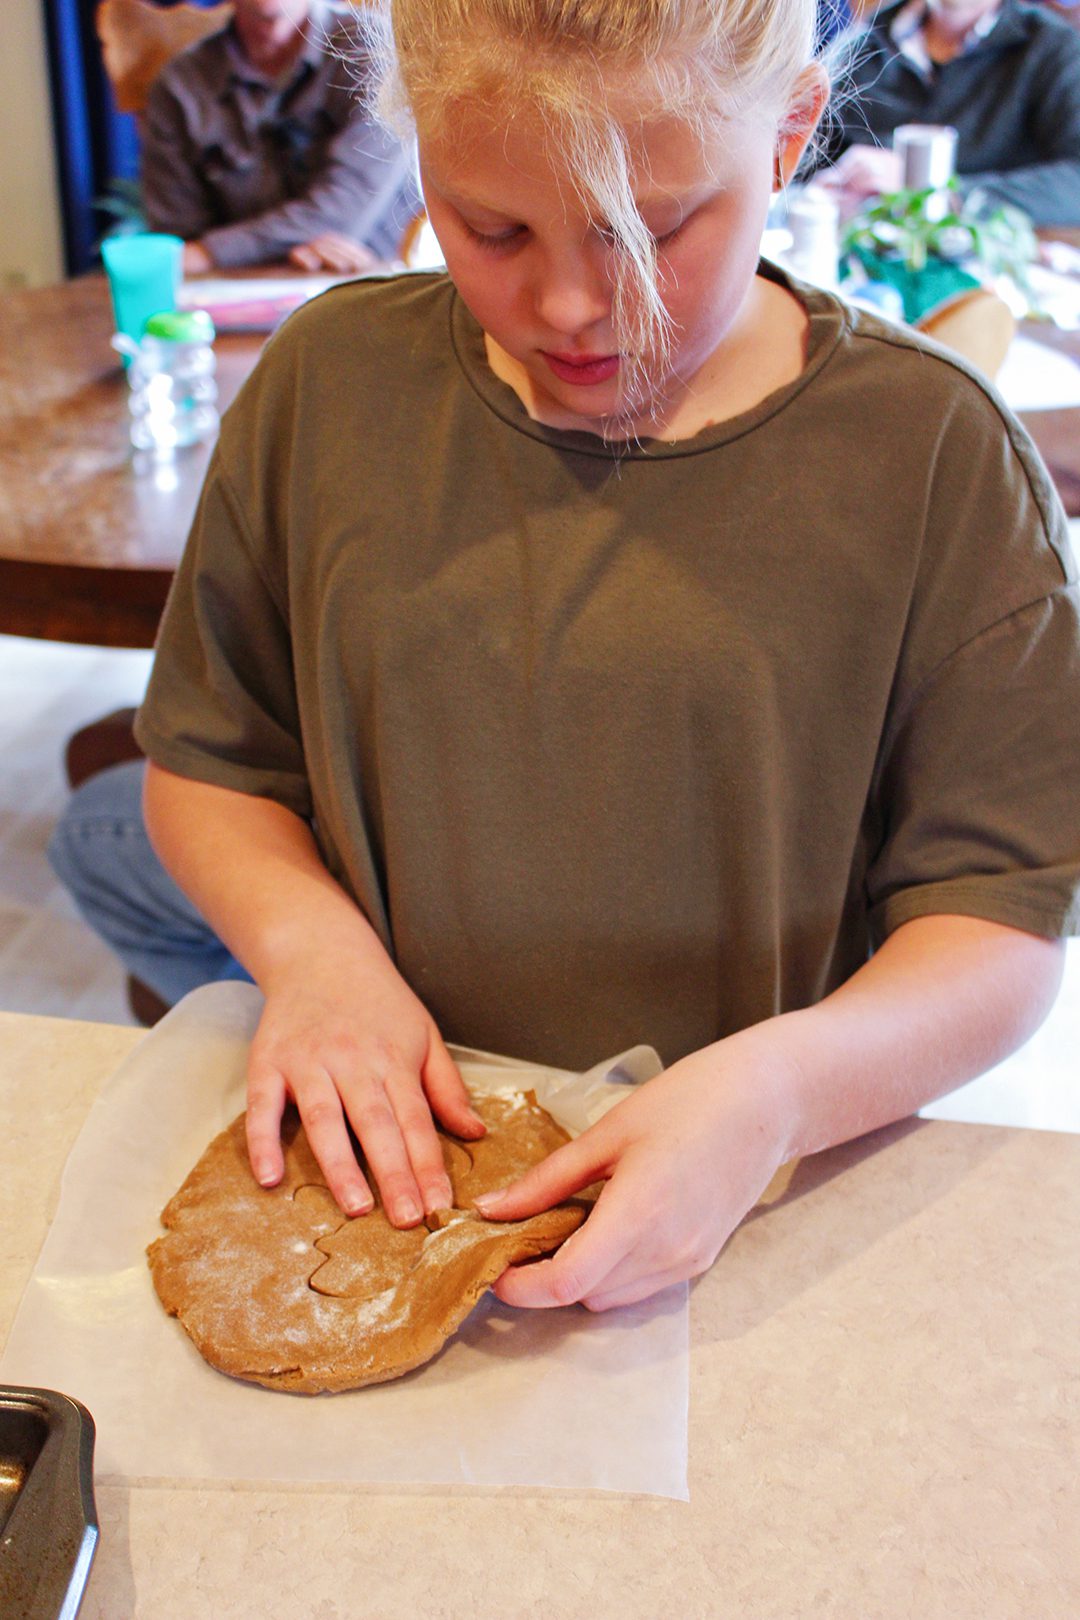 A girl cutting a snowman shape out of gingerbread dough.